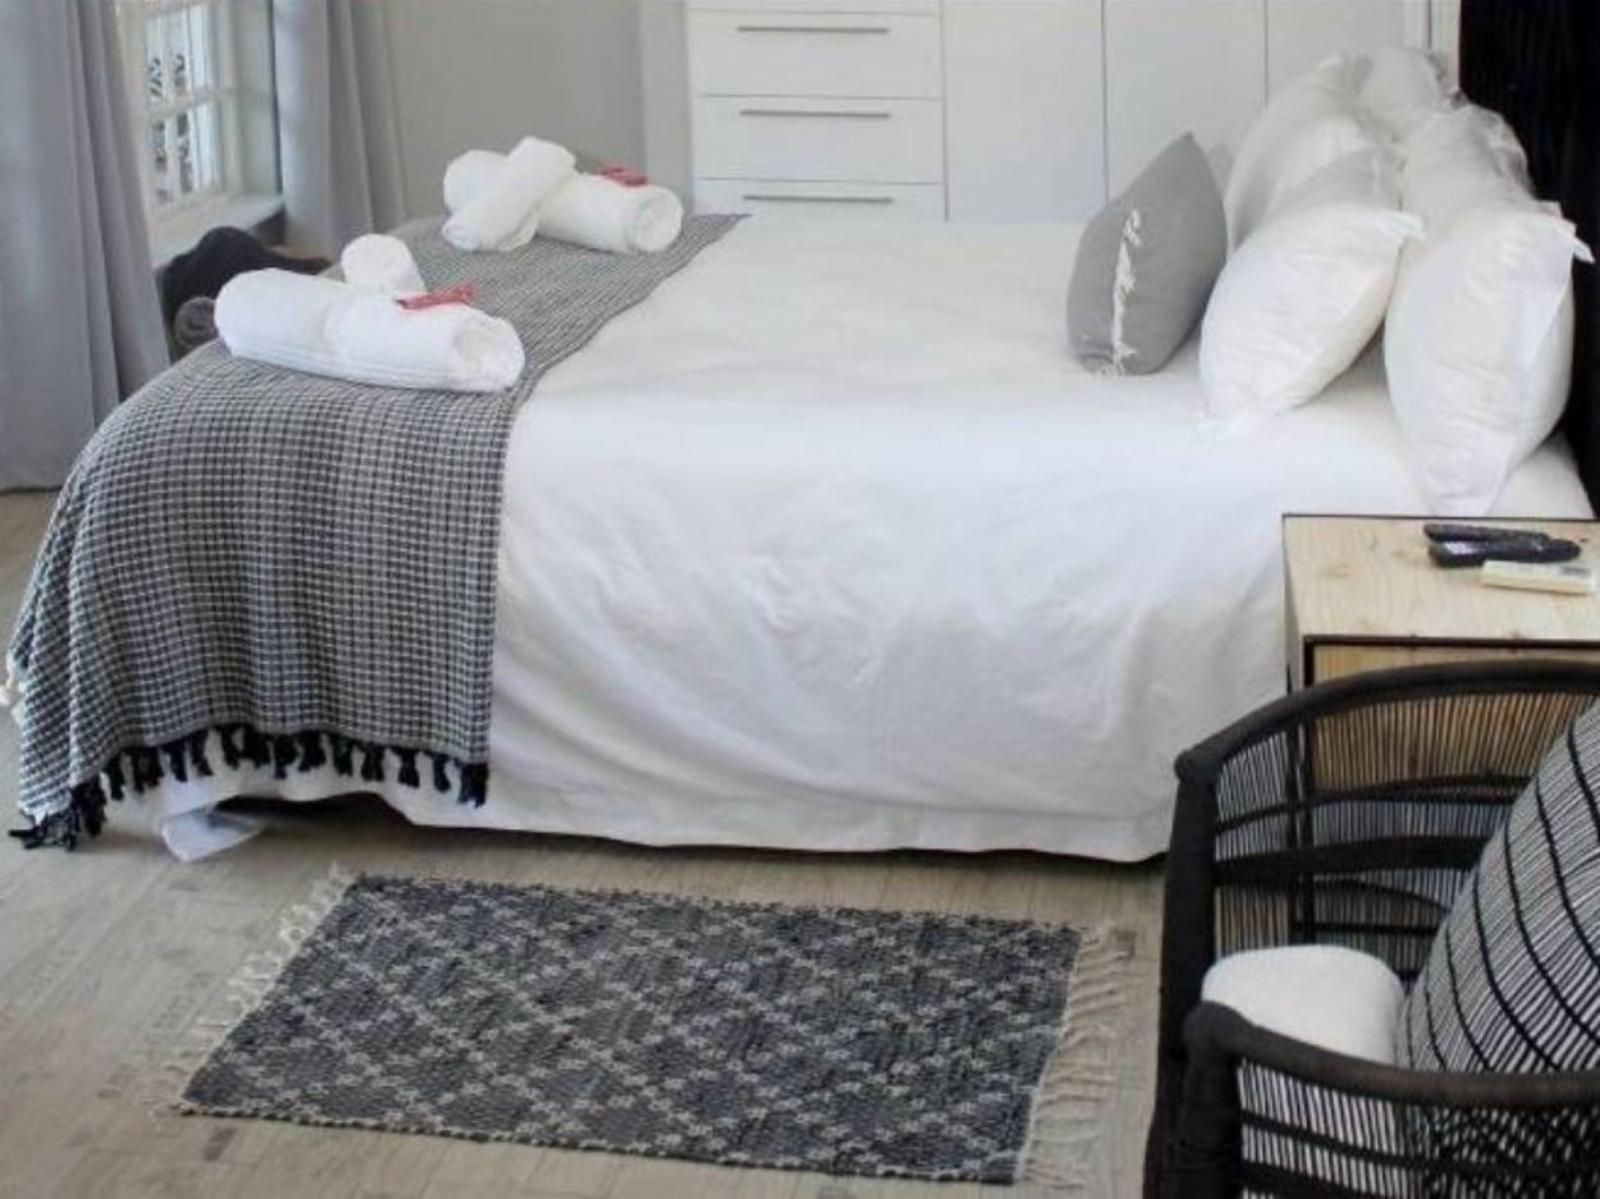 La Belle Guest House Dan Pienaar Bloemfontein Free State South Africa Unsaturated, Bedroom